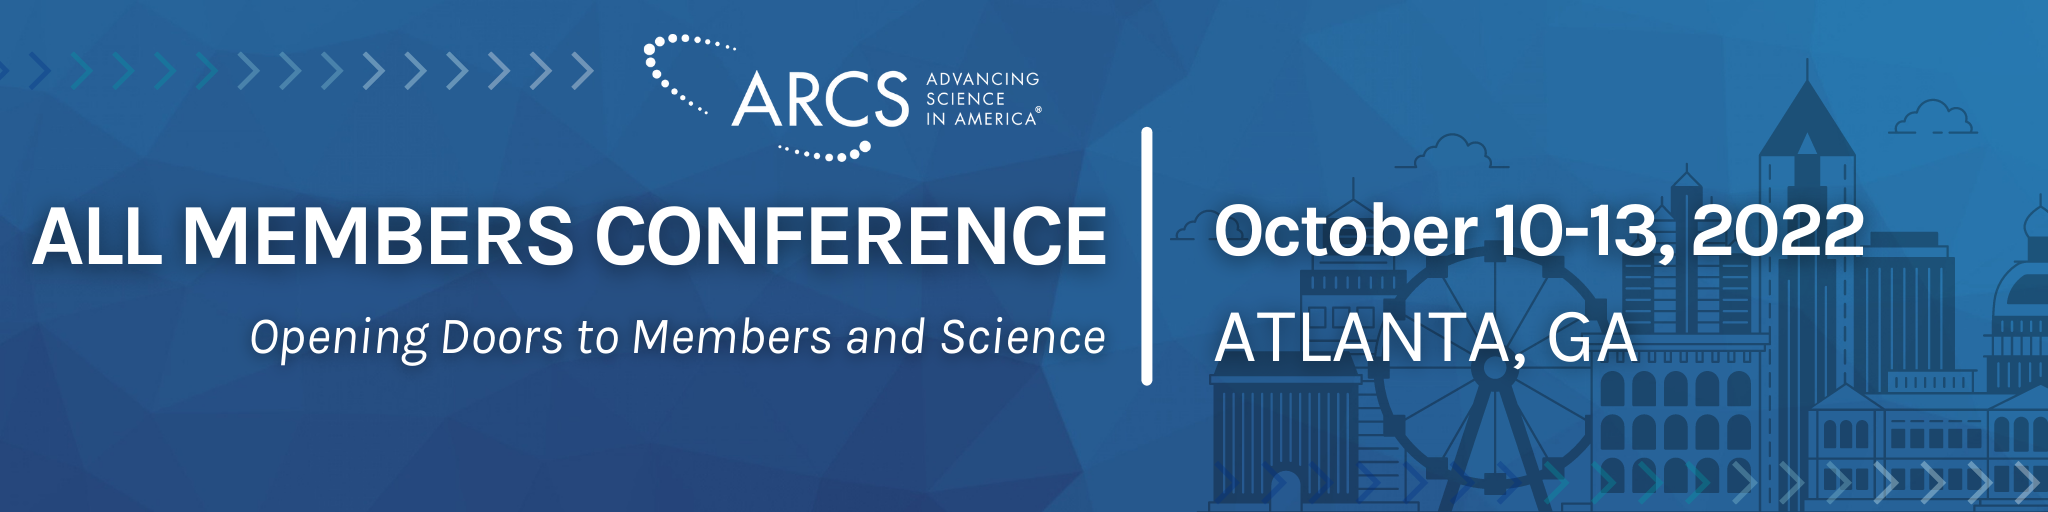 ARCS All Members Conference Opening Doors to Members and Science October 10-13, 2022 in Atlanta, GA